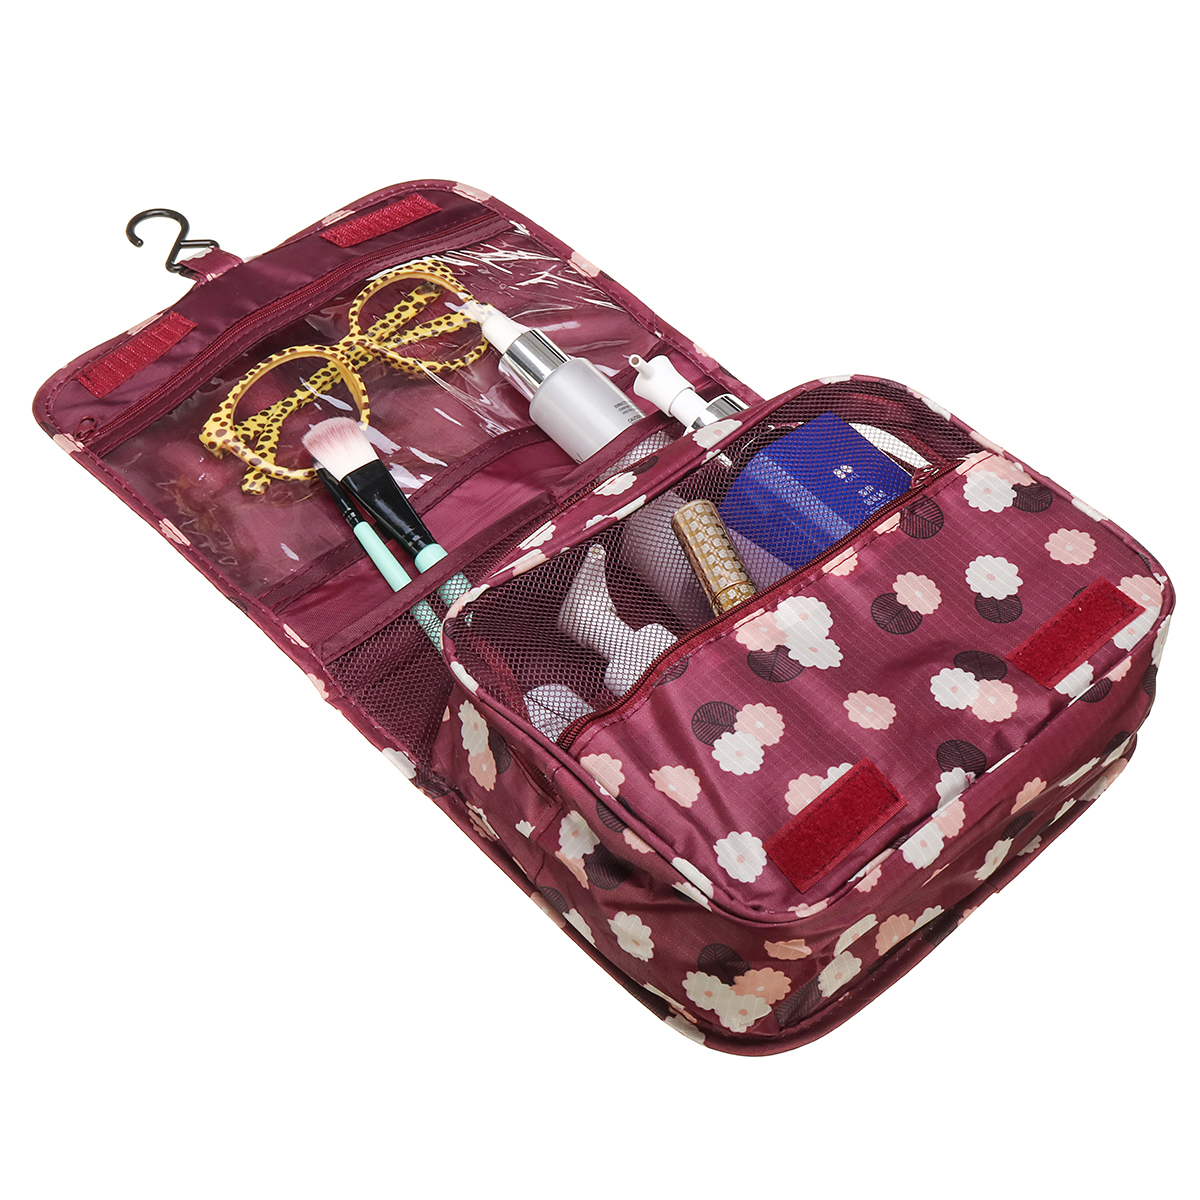 Portable Travel Toiletry Bag Travel Home Organizer Carry Cosmetic Makeup Bag, Wash Organizer Storage Handbag Pouch Bag - image 2 of 7